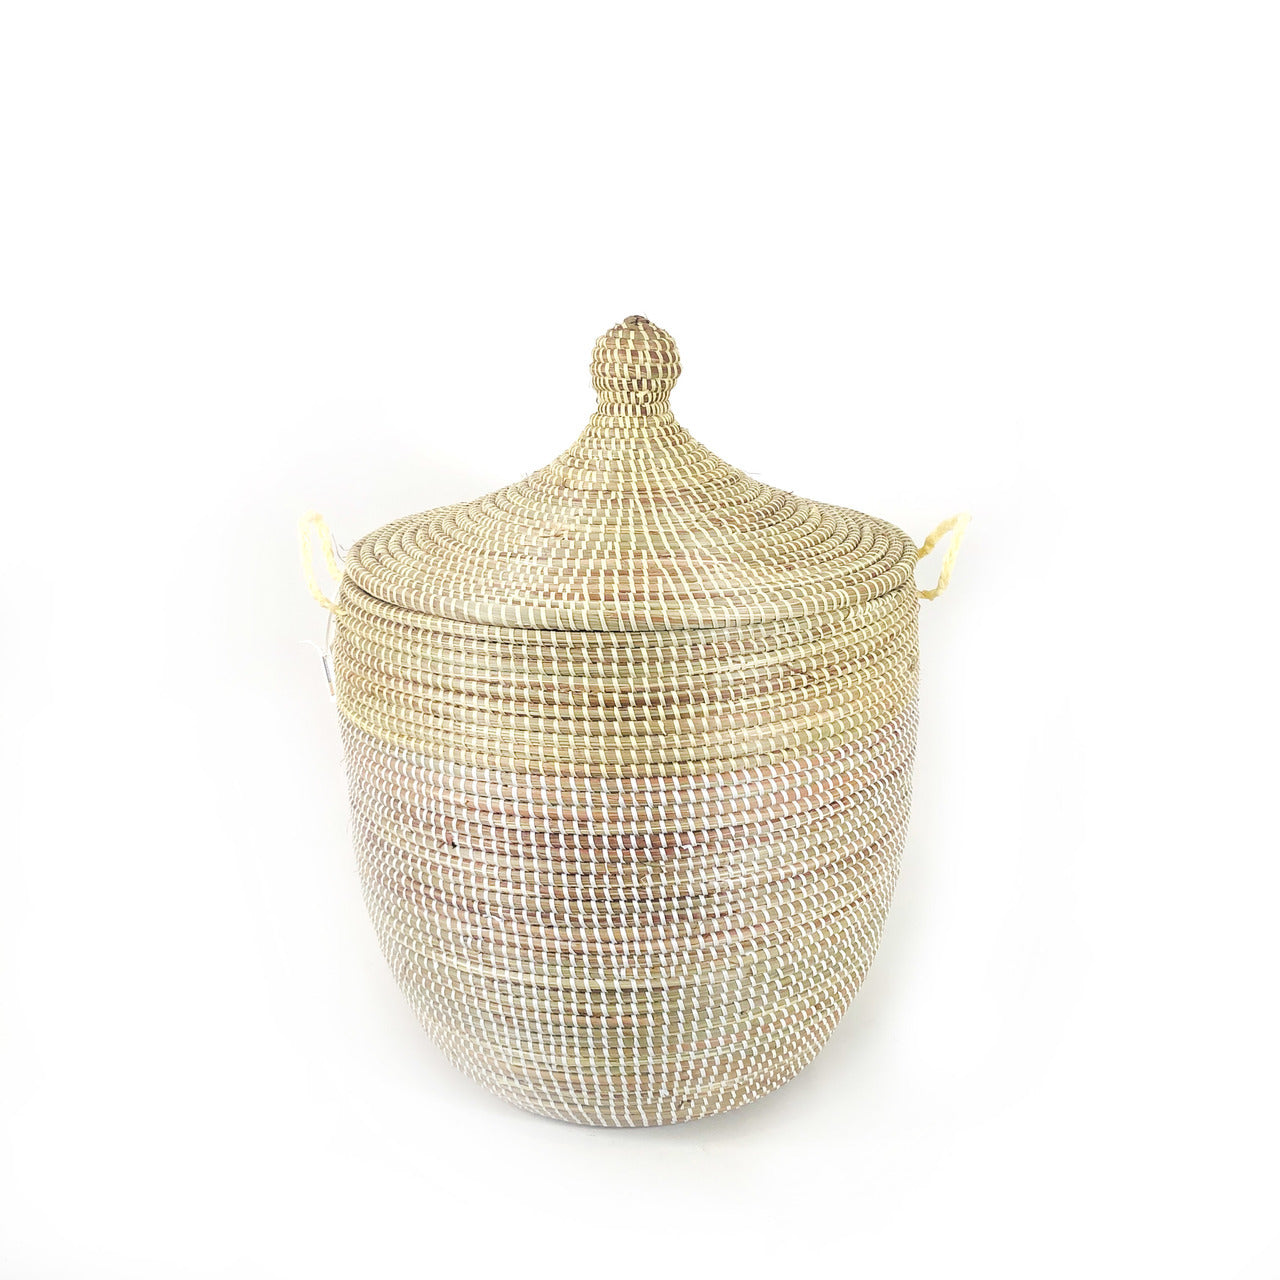 Medium Two-Tone Basket - Natural + White